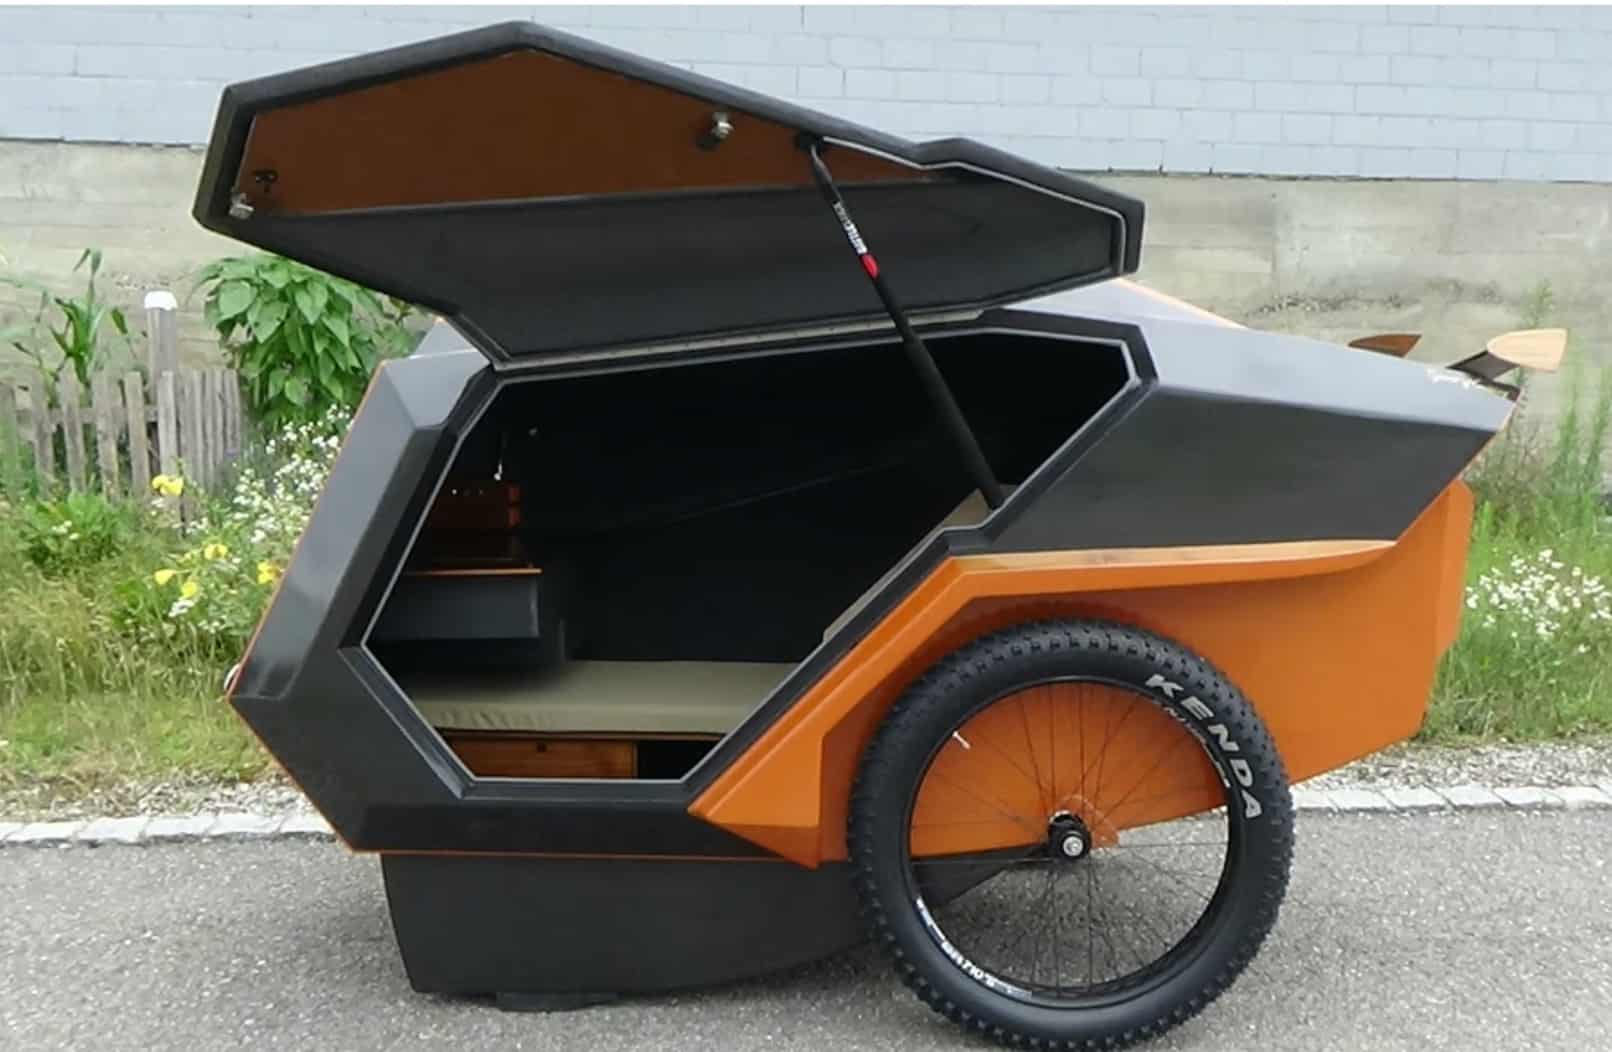 esse mini trailer serve de reboque para e-bikes